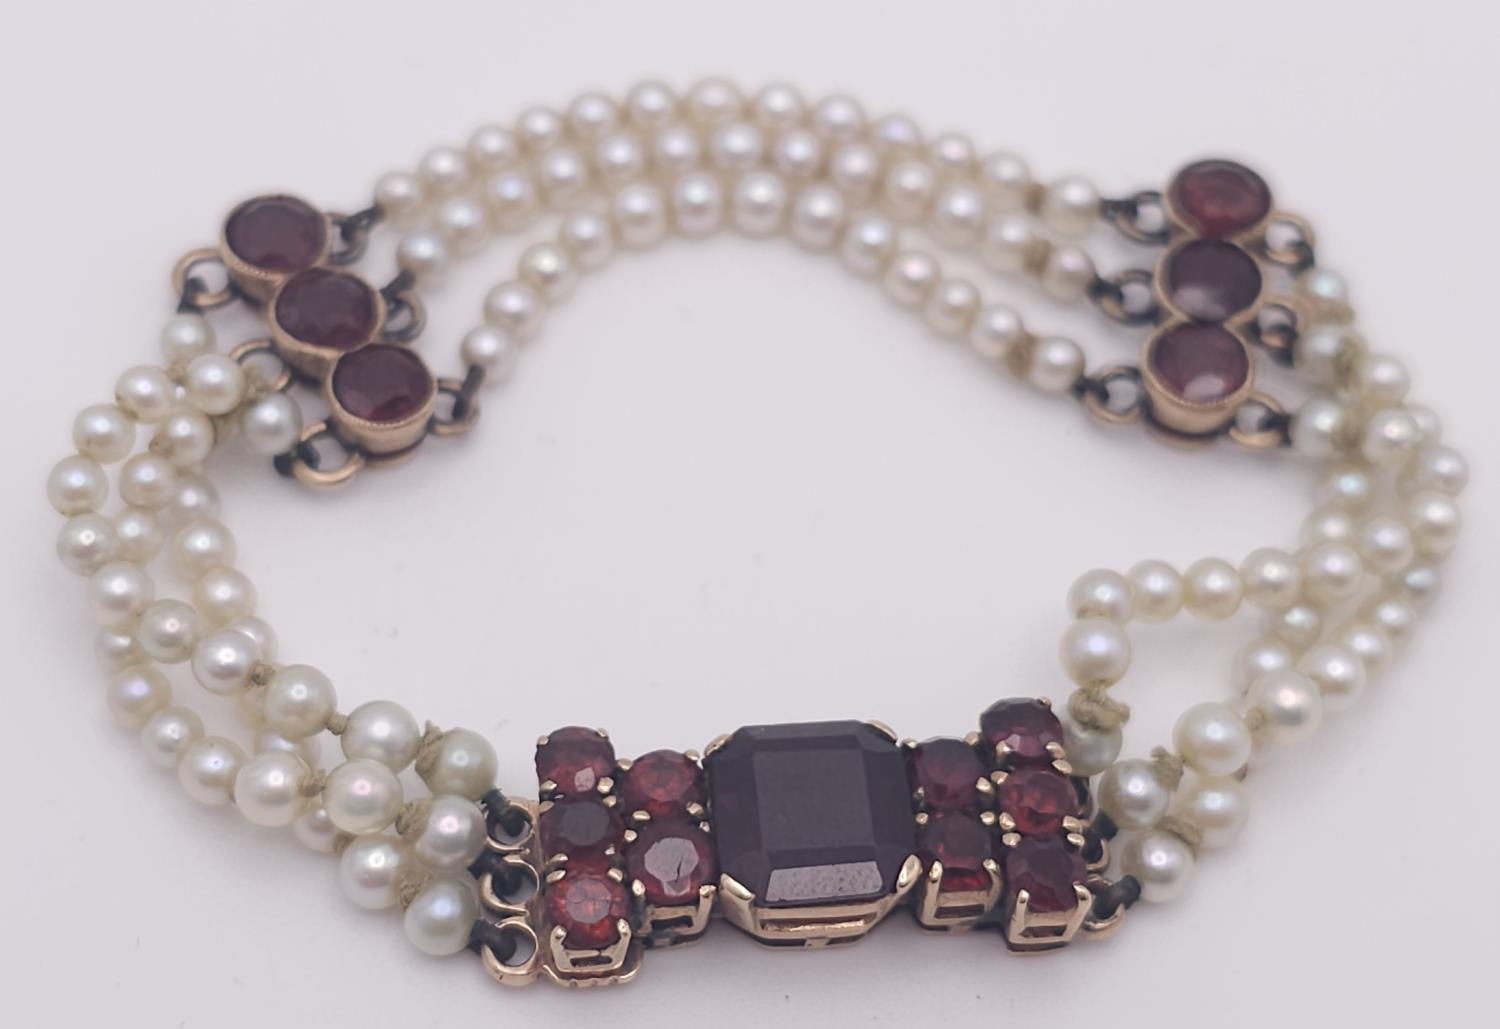 An Antique 9K Gold (tested), Garnet and Pearl Bracelet. Different cuts of rich garnet gemstones